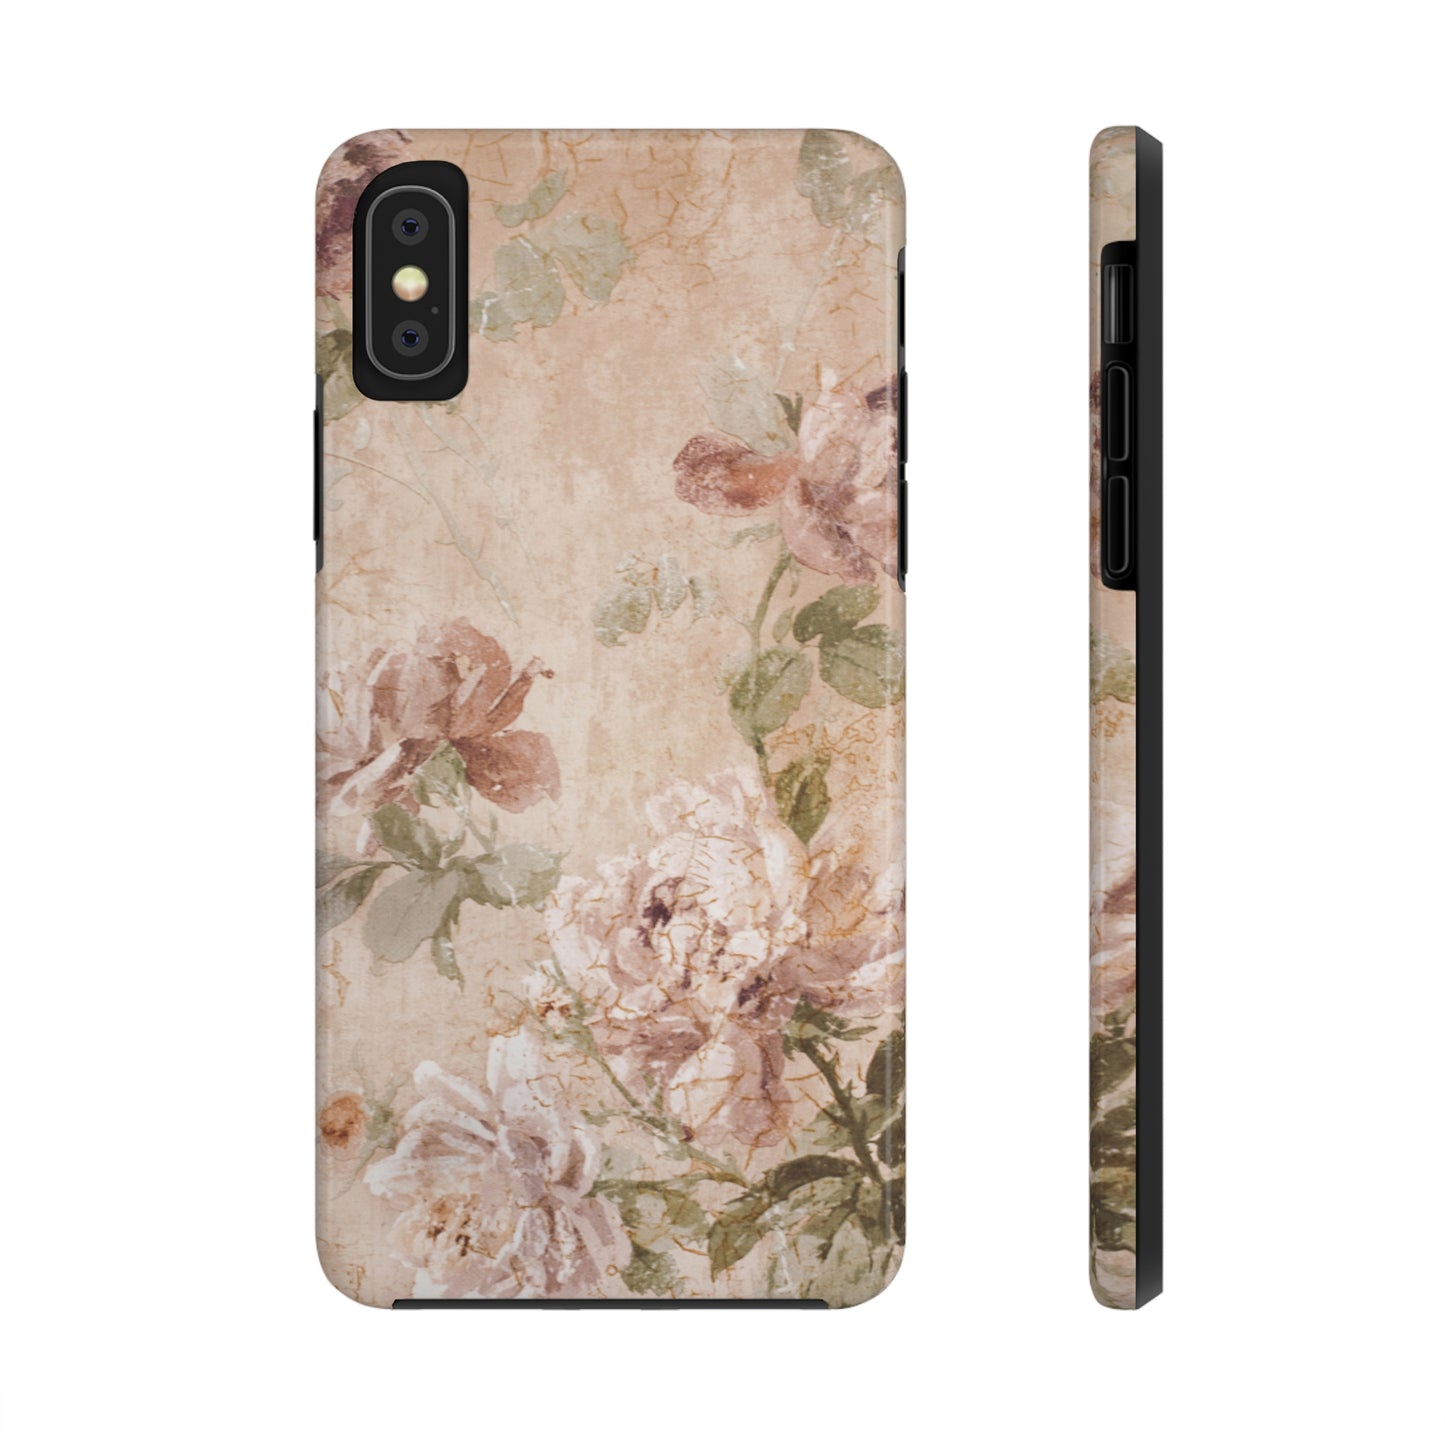 Vintage Floral iPhone case